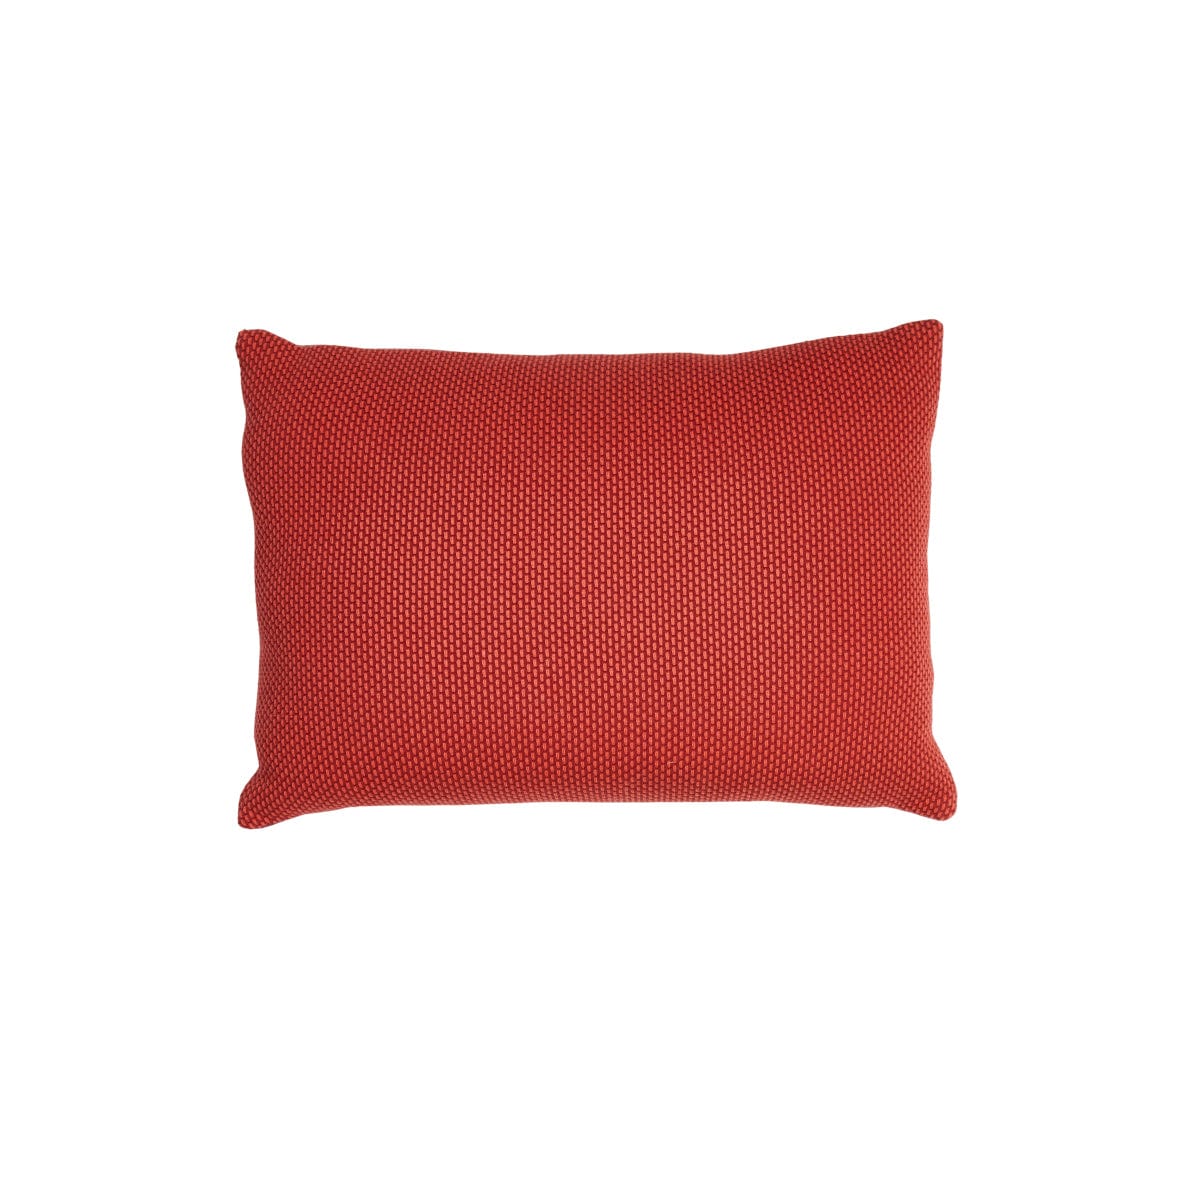 Hand Made Cushion - Burgundy &amp; Red